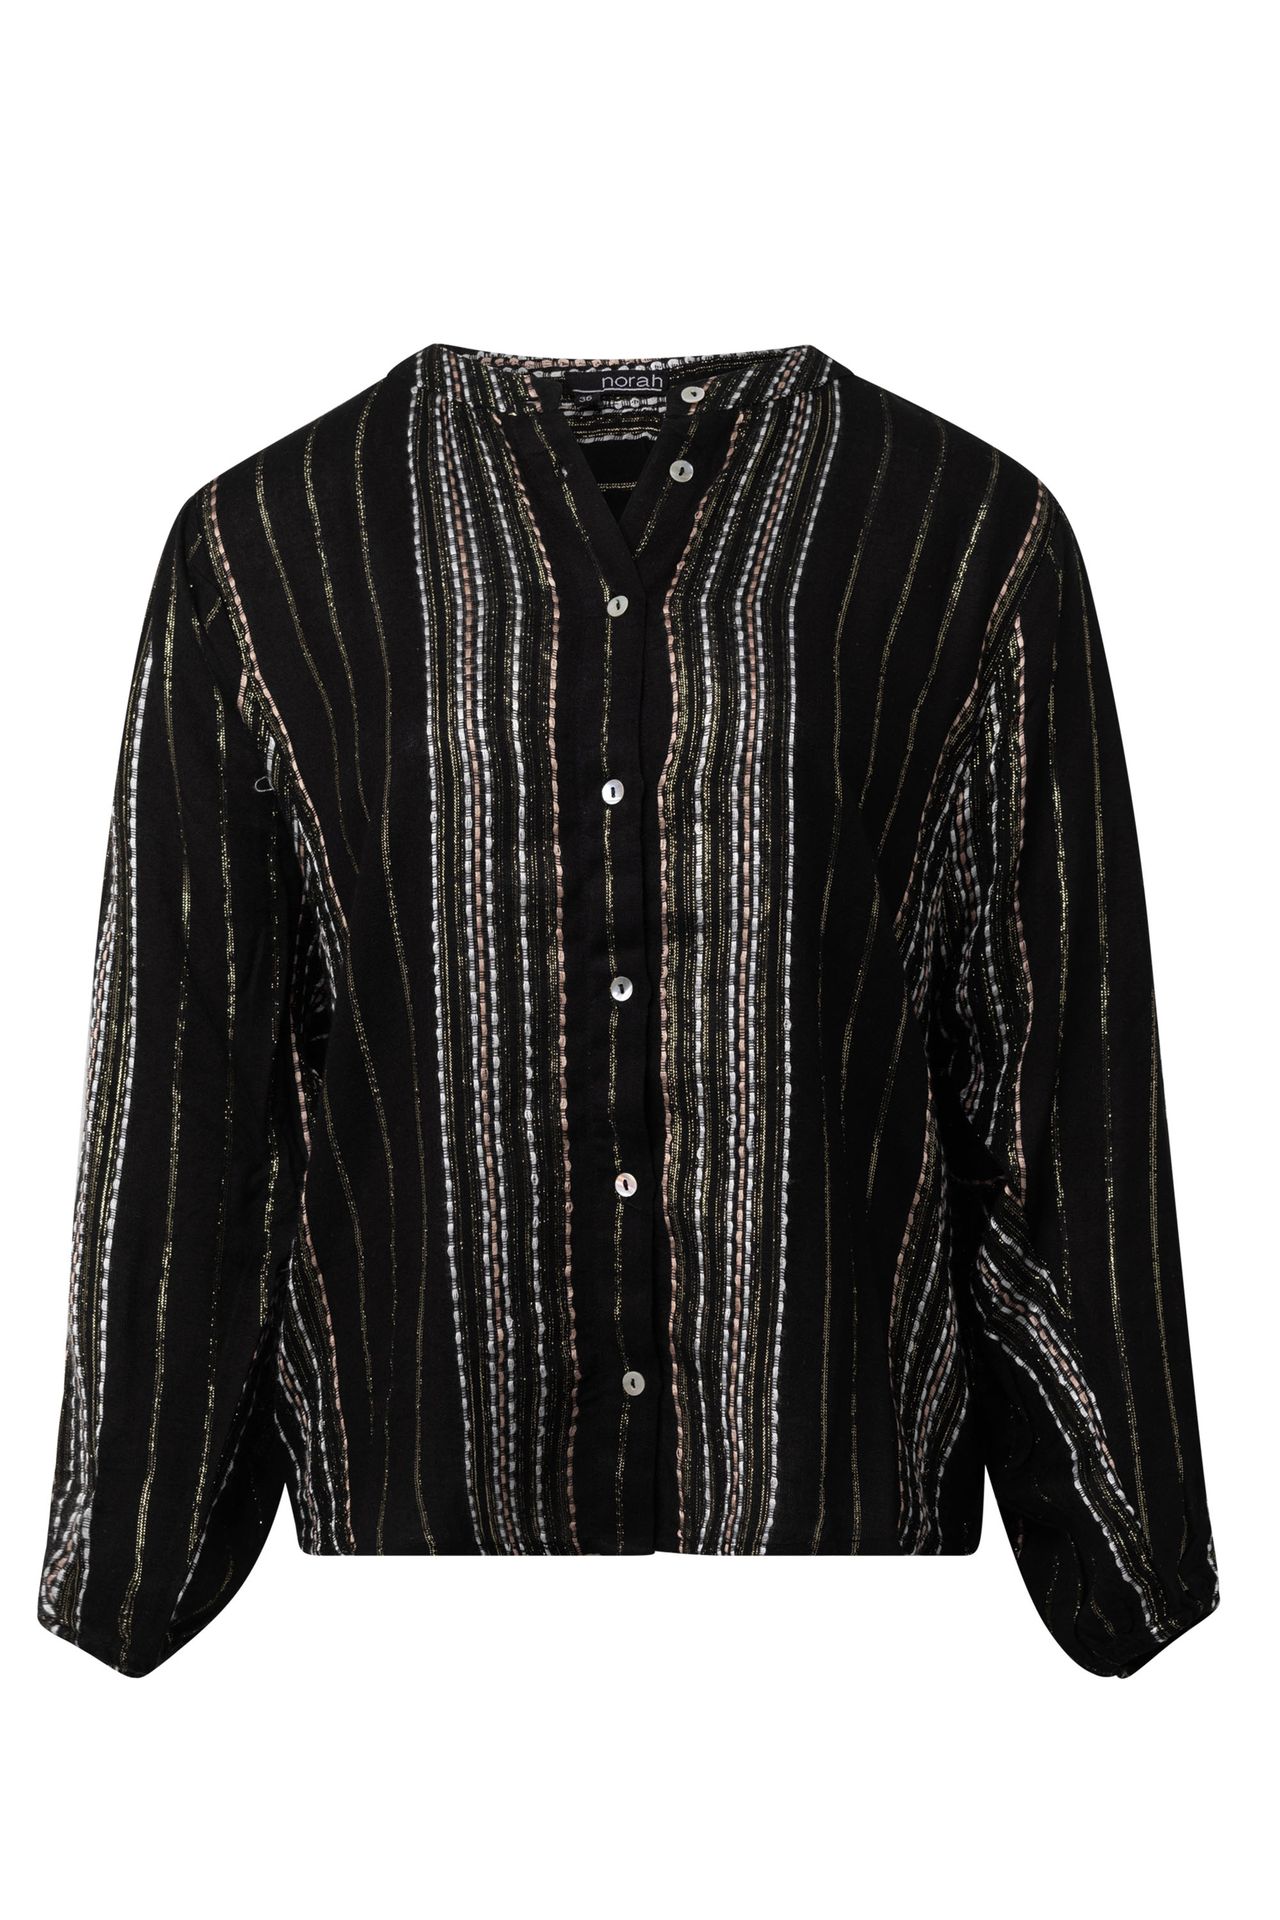 Norah Zwarte blouse black multicolor 214307-020